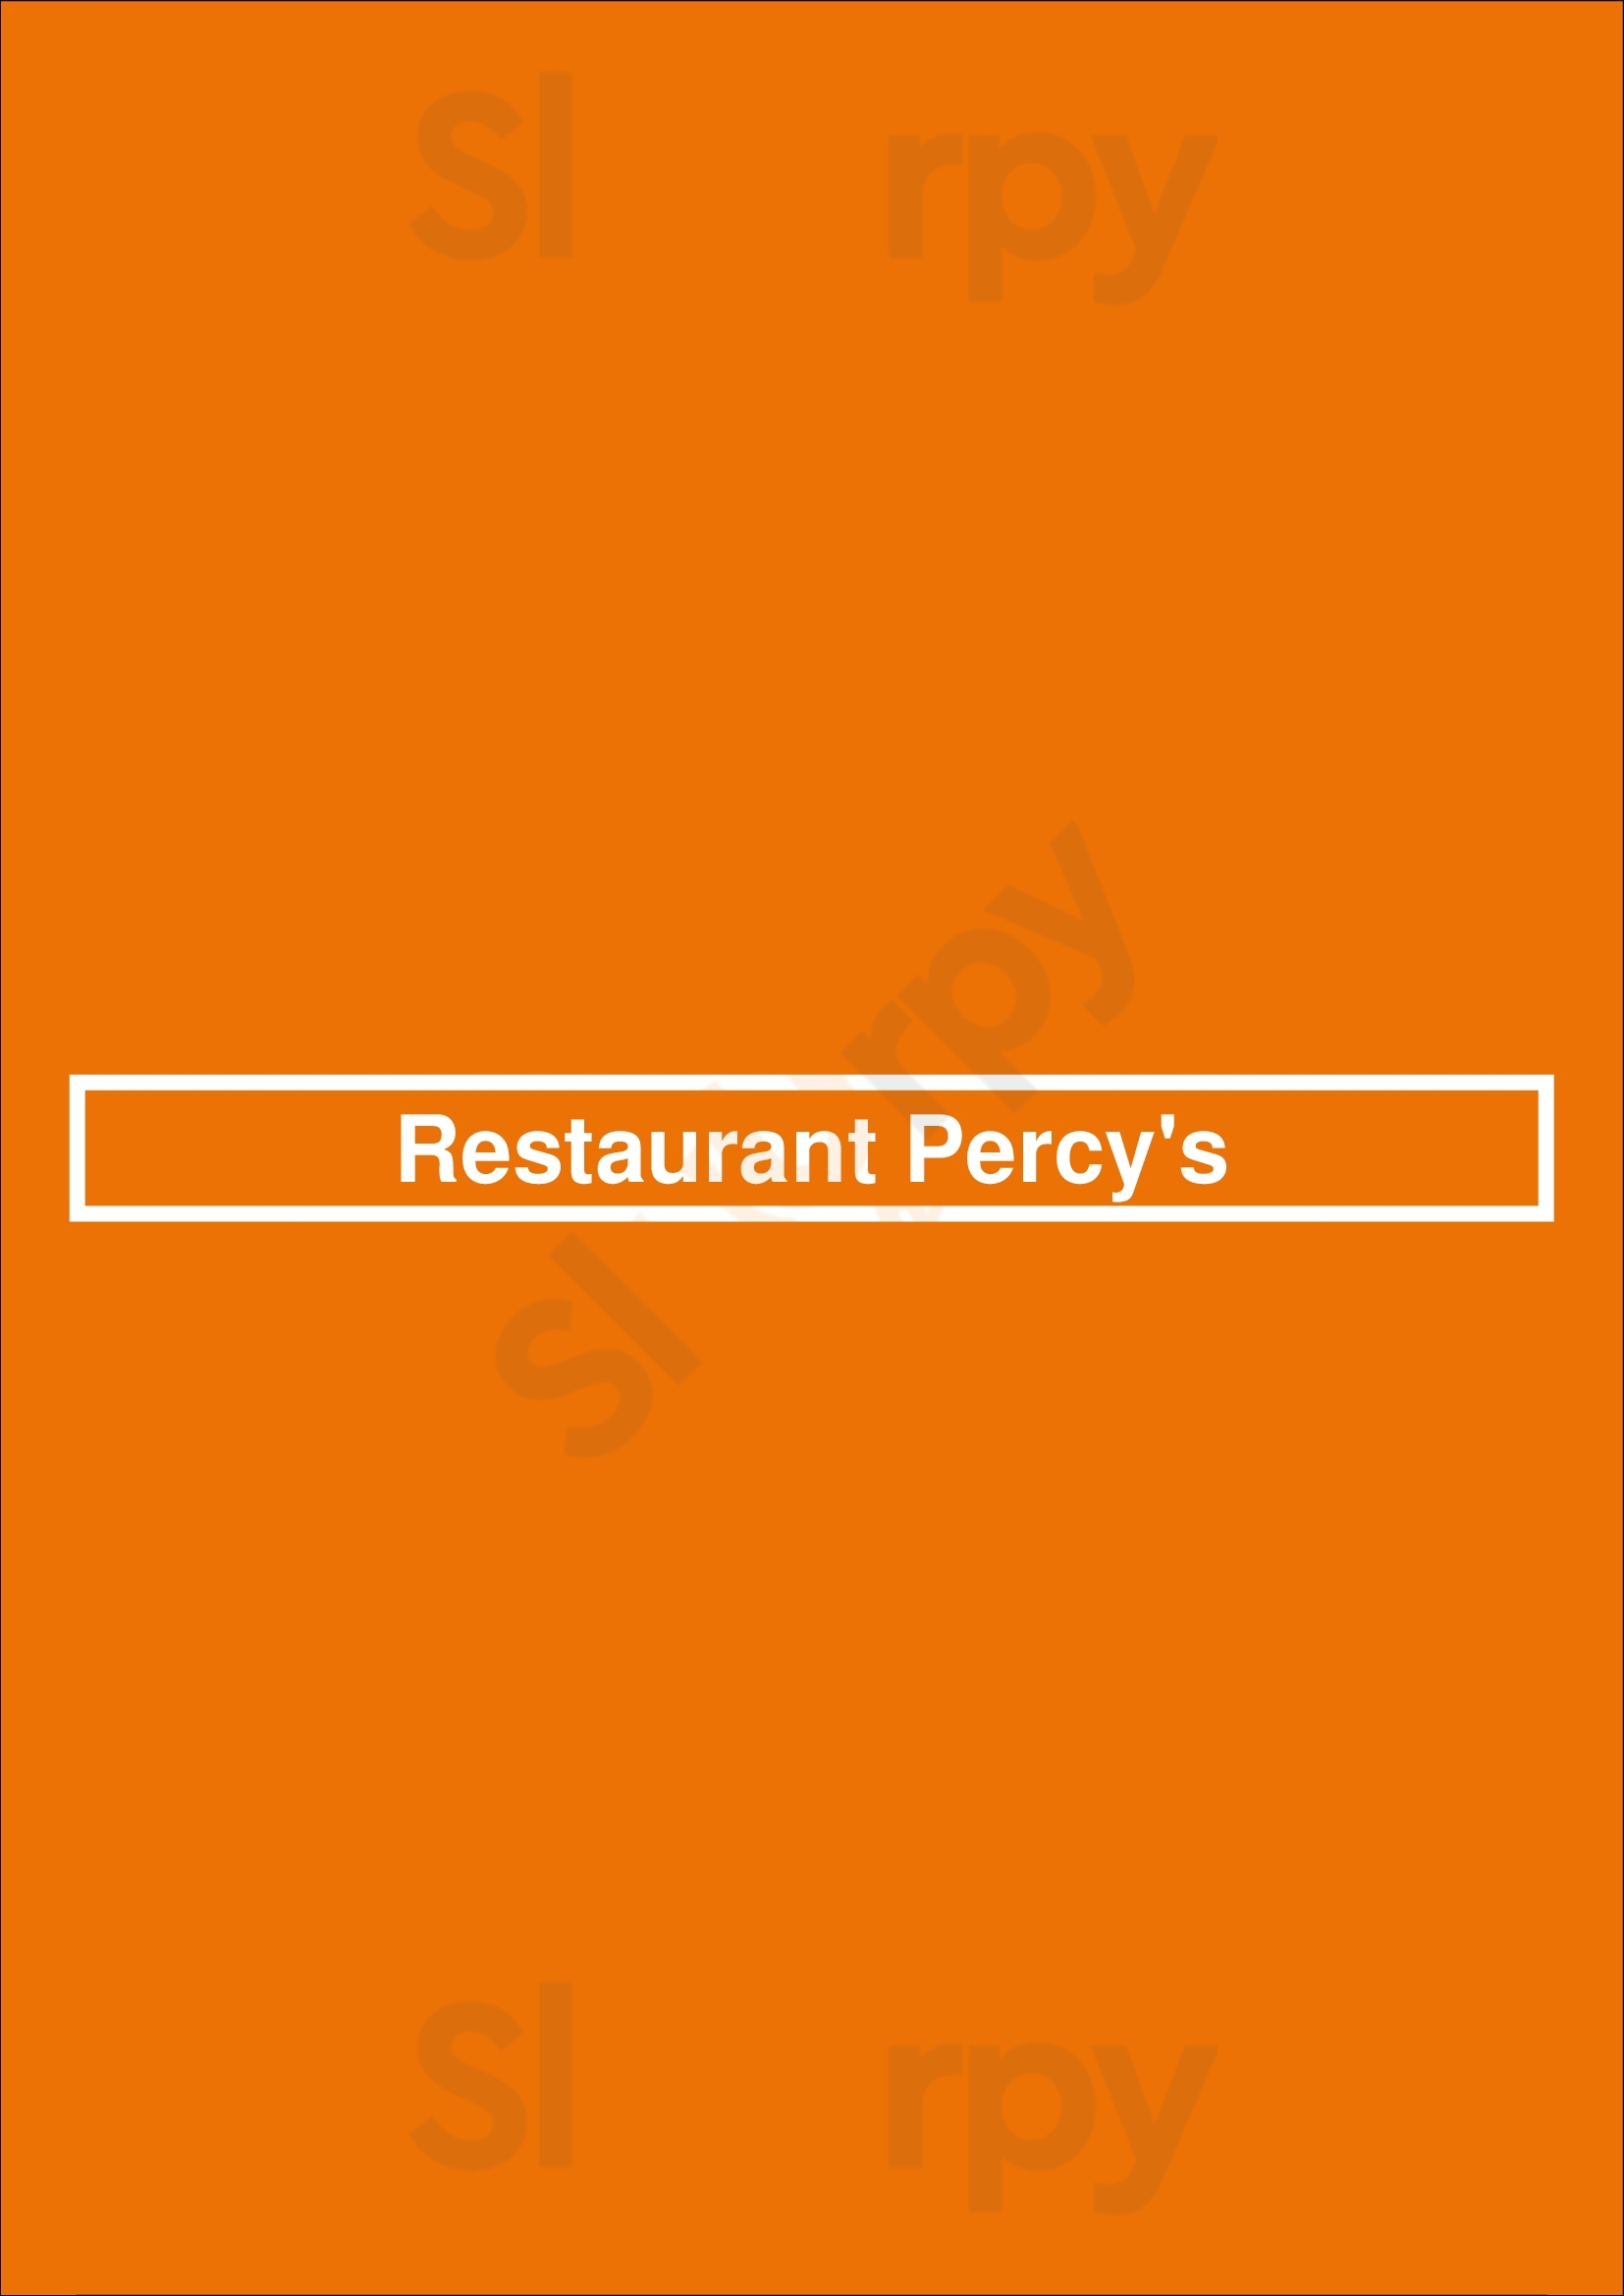 Restaurant Percy's Hoorn Menu - 1